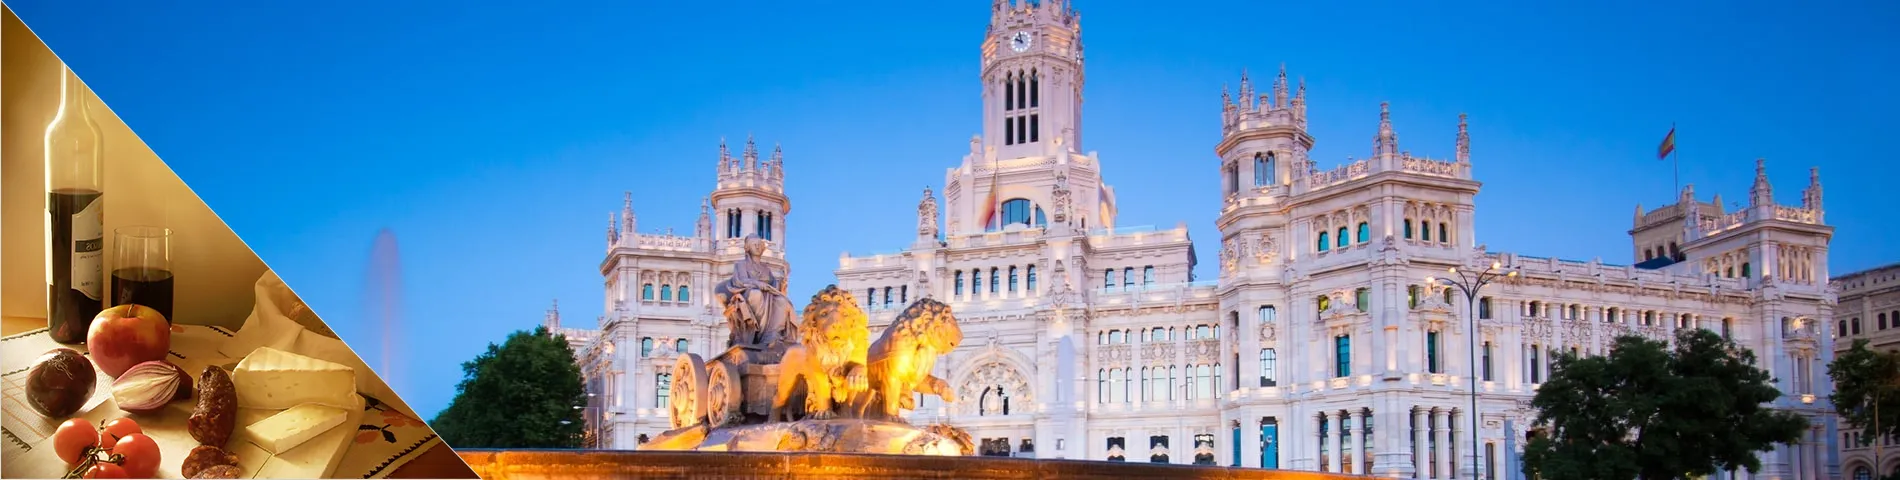 Madrid - Español + Cultura